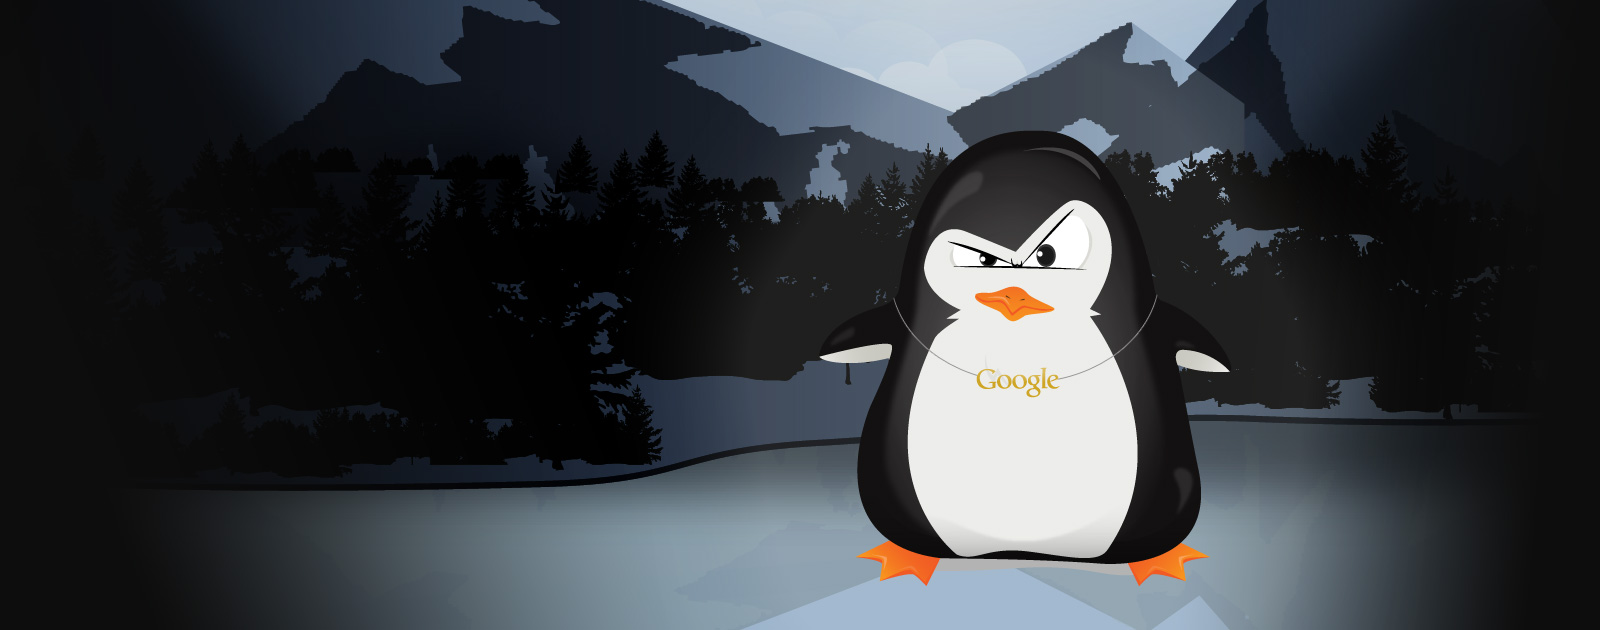 Penguin wearing Google chain